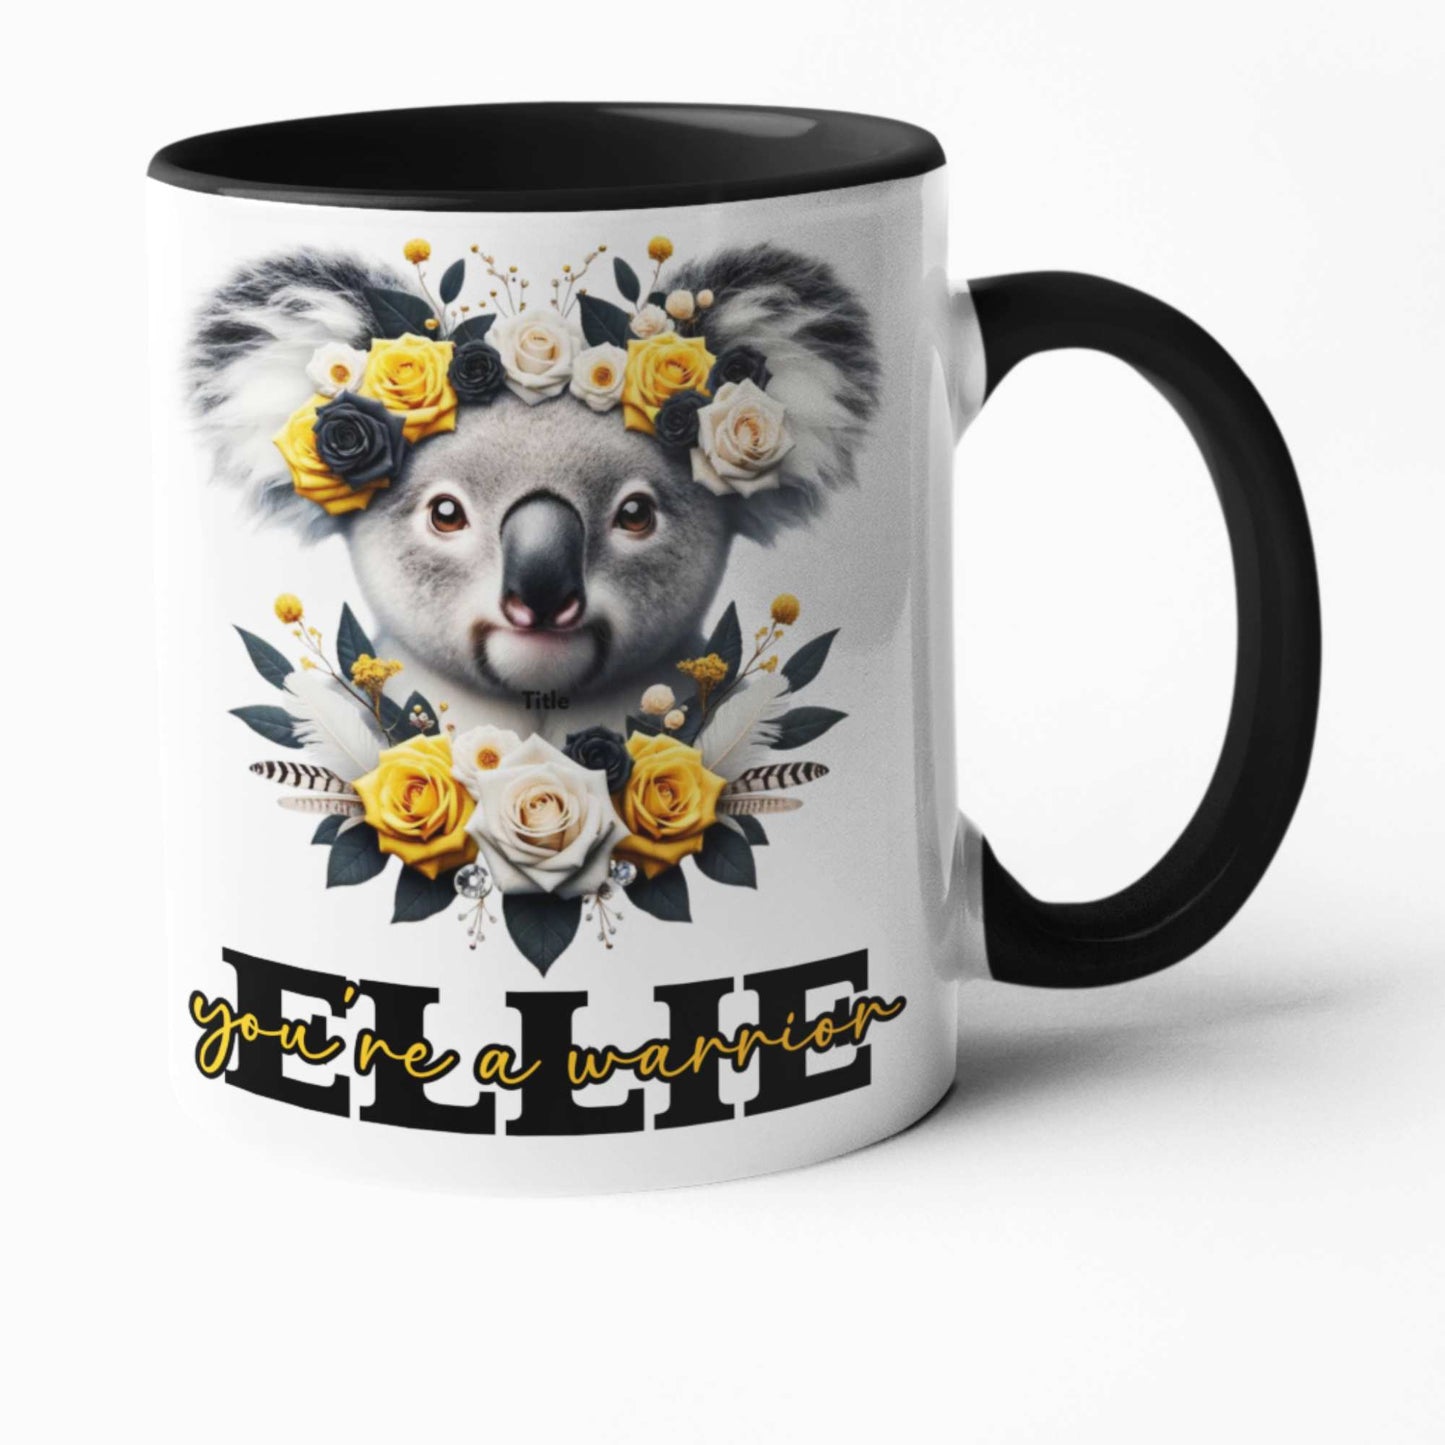 Koala Inspirational Mug & Tumbler Set - Personalizable 11oz/15oz Ceramic Mugs, 20oz Travel Tumbler, Colorful Coasters - "You're a Warrior" Collection